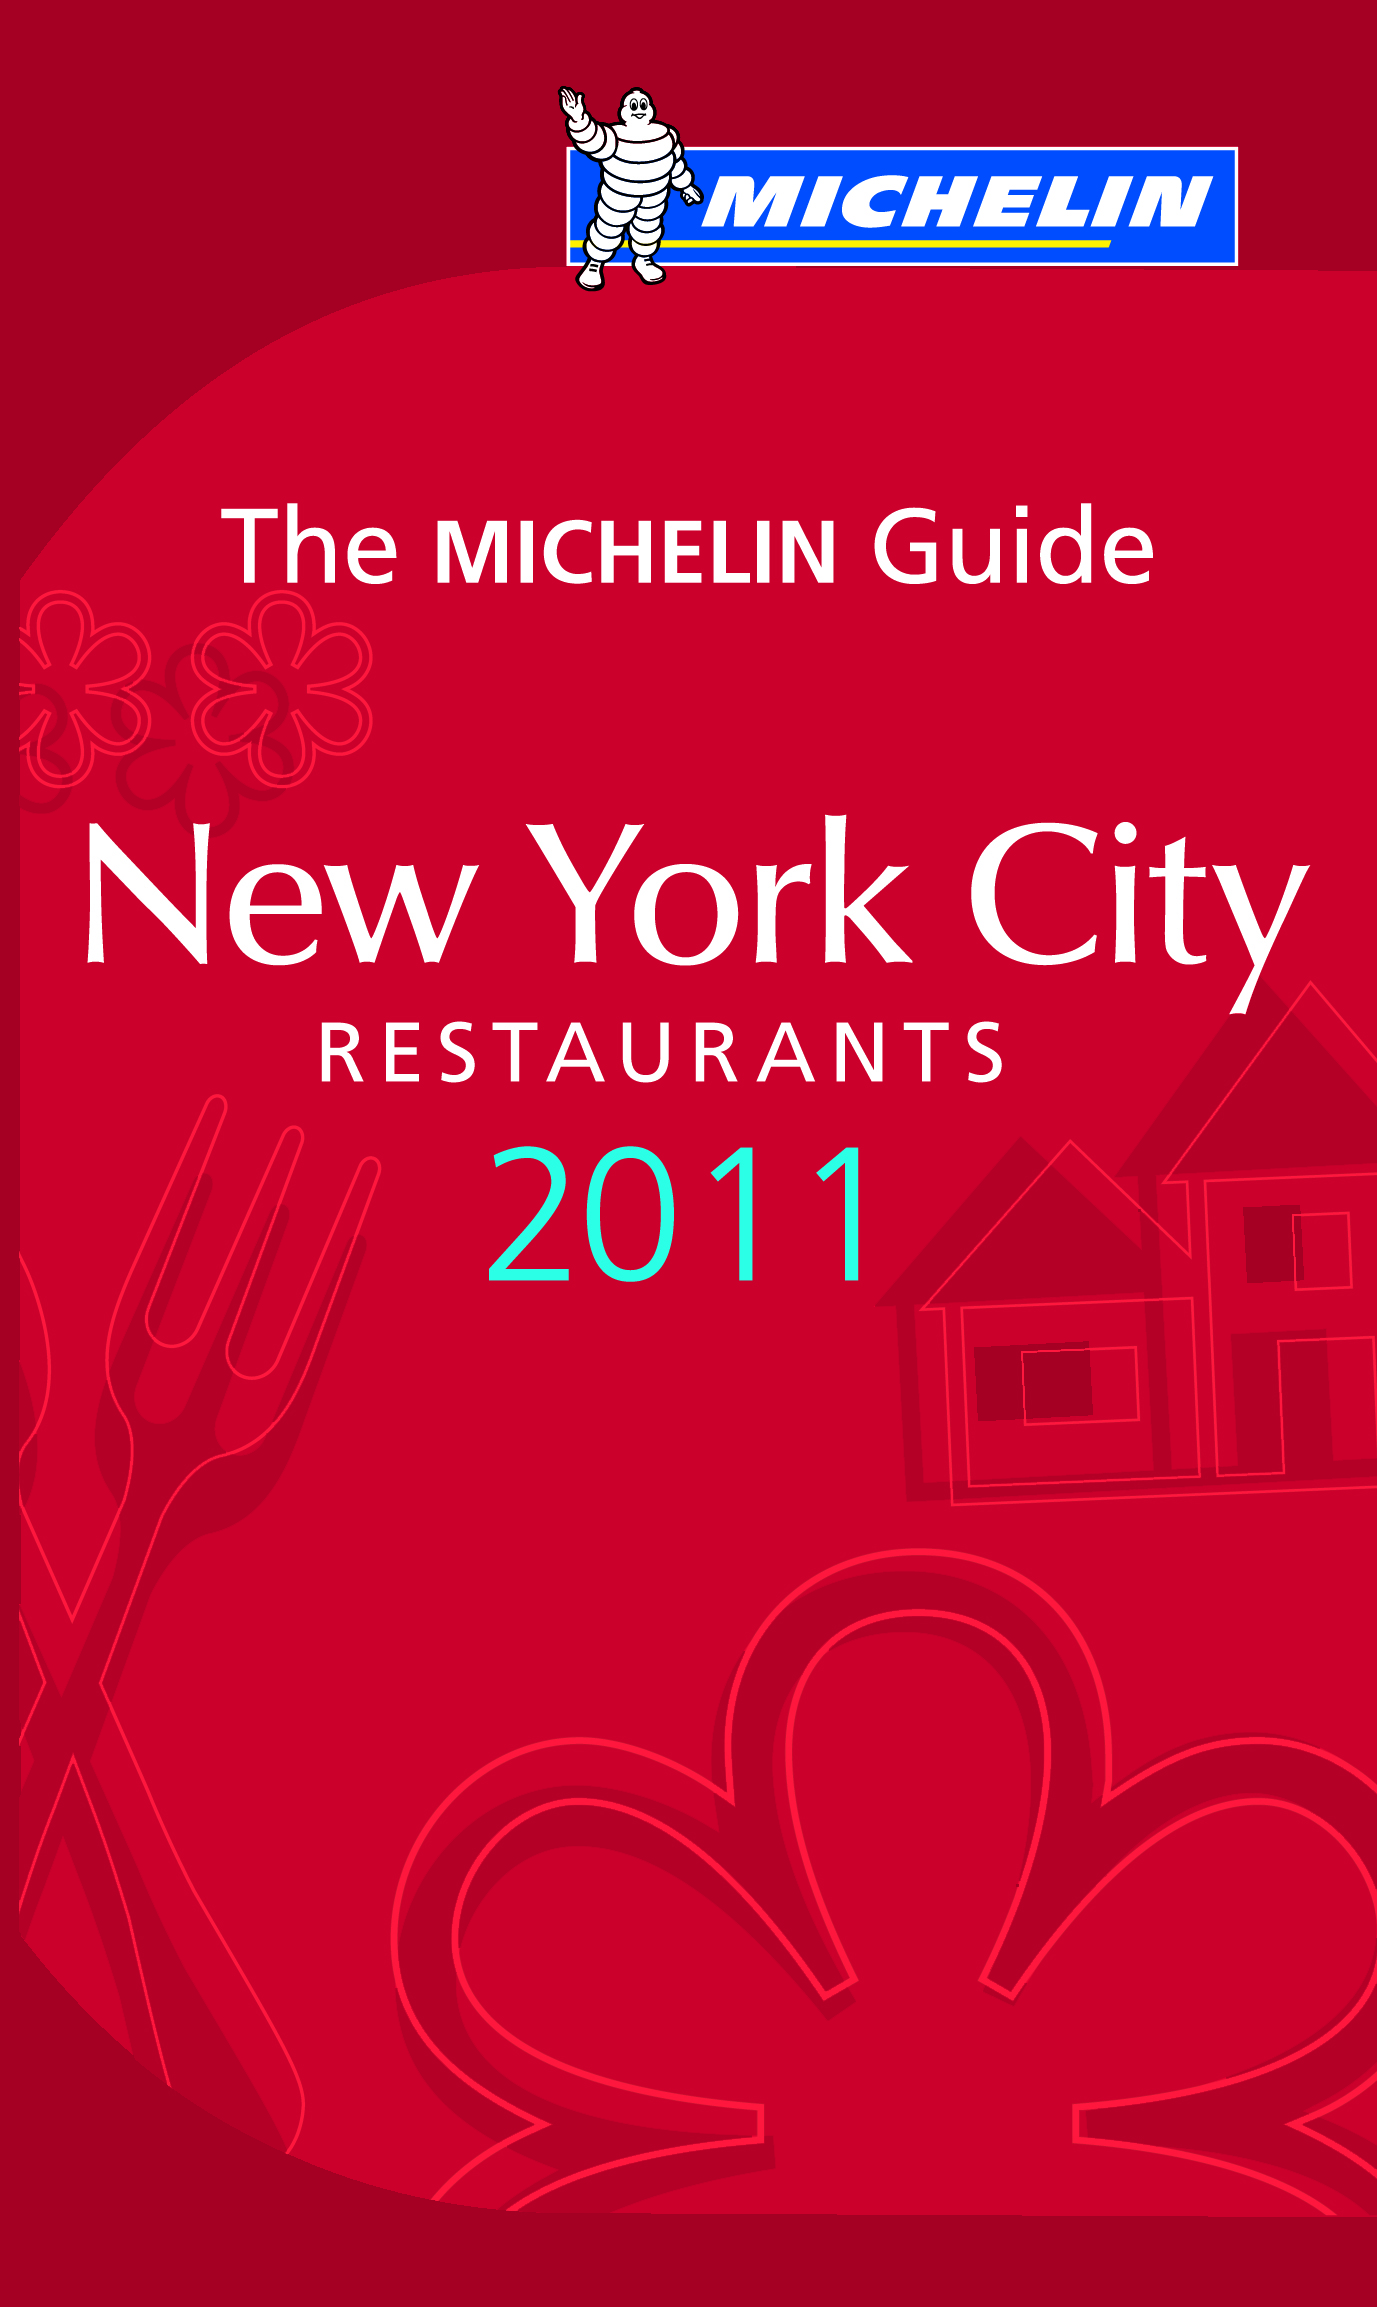 The Michelin Guide New York City Restaurants 2011